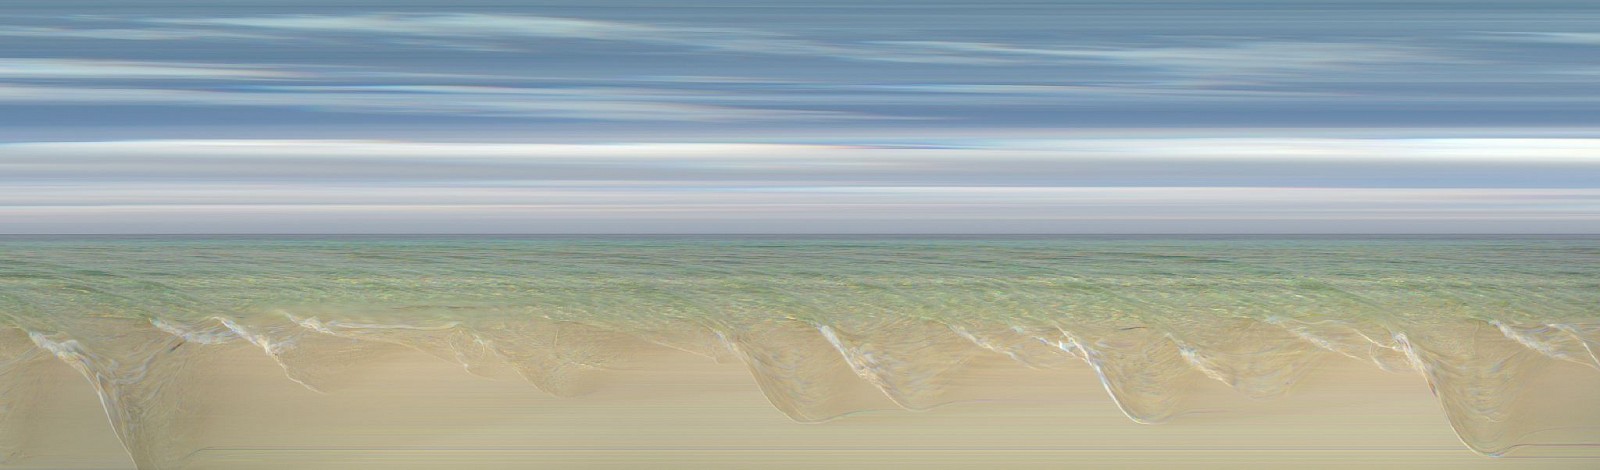 Jay Mark Johnson, COZUMEL WAVES #6, 2009 Cozumel MX
archival pigment on paper, mounted on aluminum, 40 x 136 in. (101.6 x 345.4 cm)